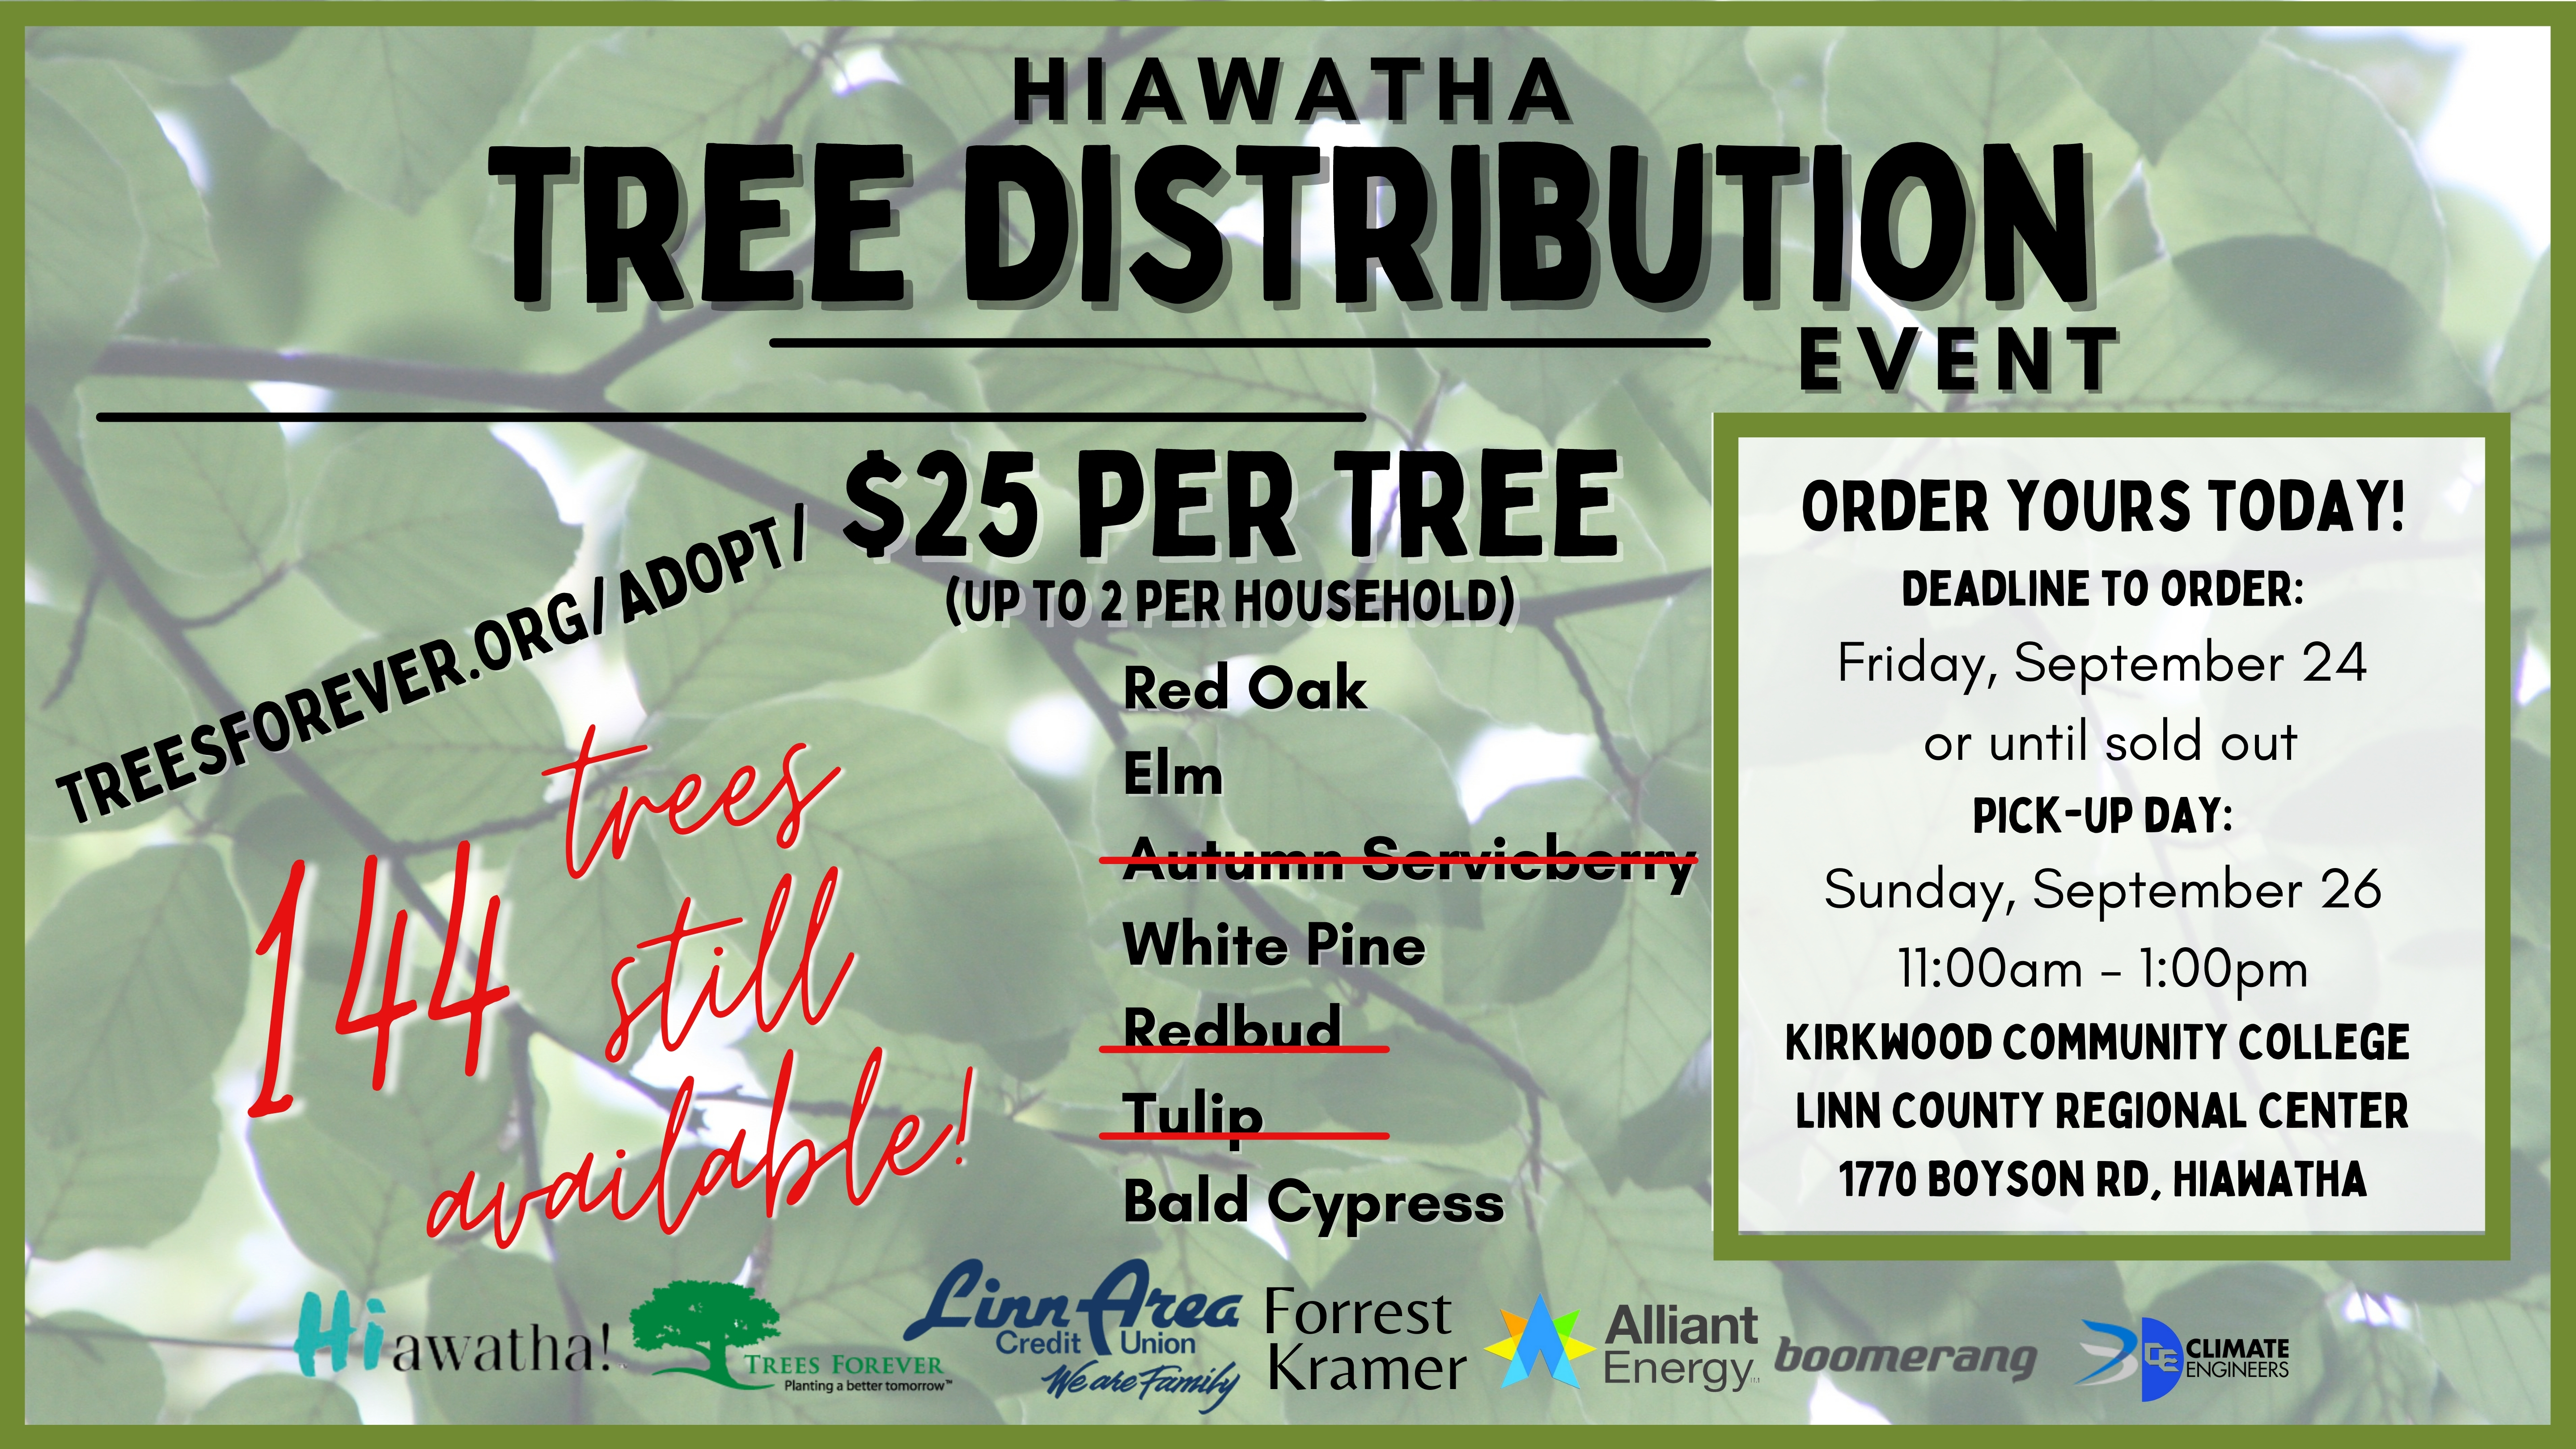 Copy of Final Tree Distribution Postcard